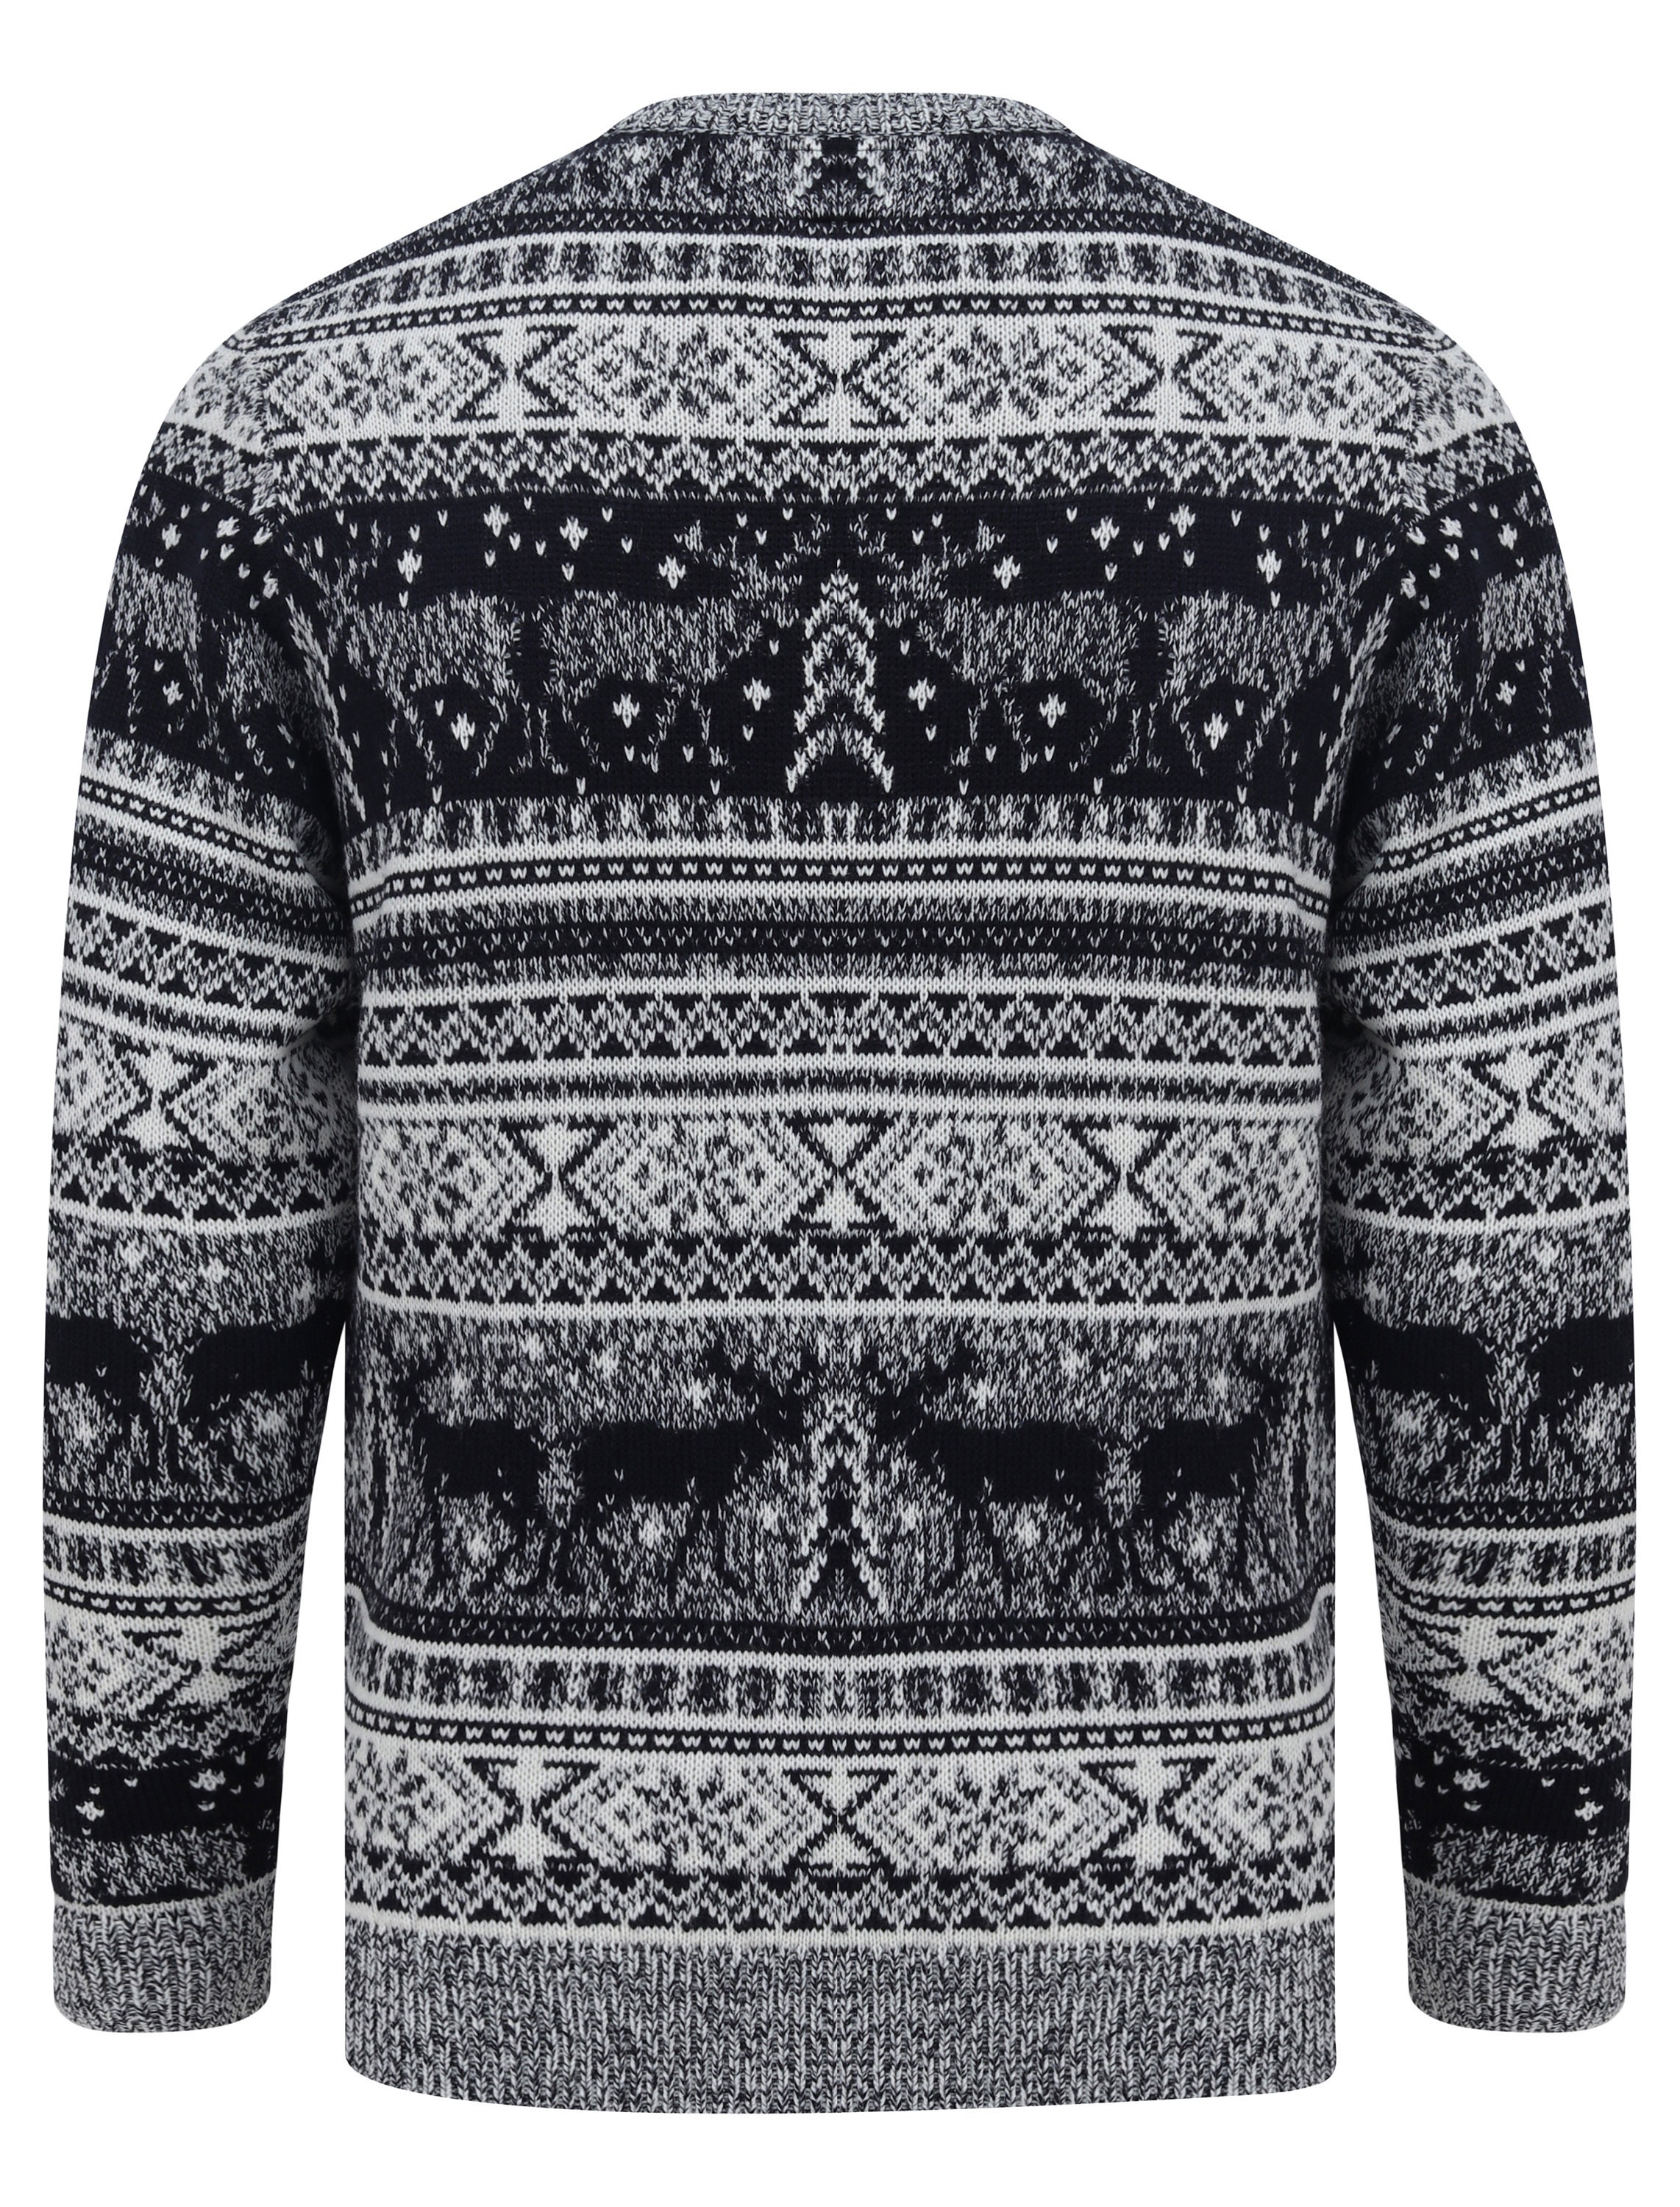 Men's Christmas Novelty Jumper Fair Isle Knitted Xmas Sweater Top - Etsy UK